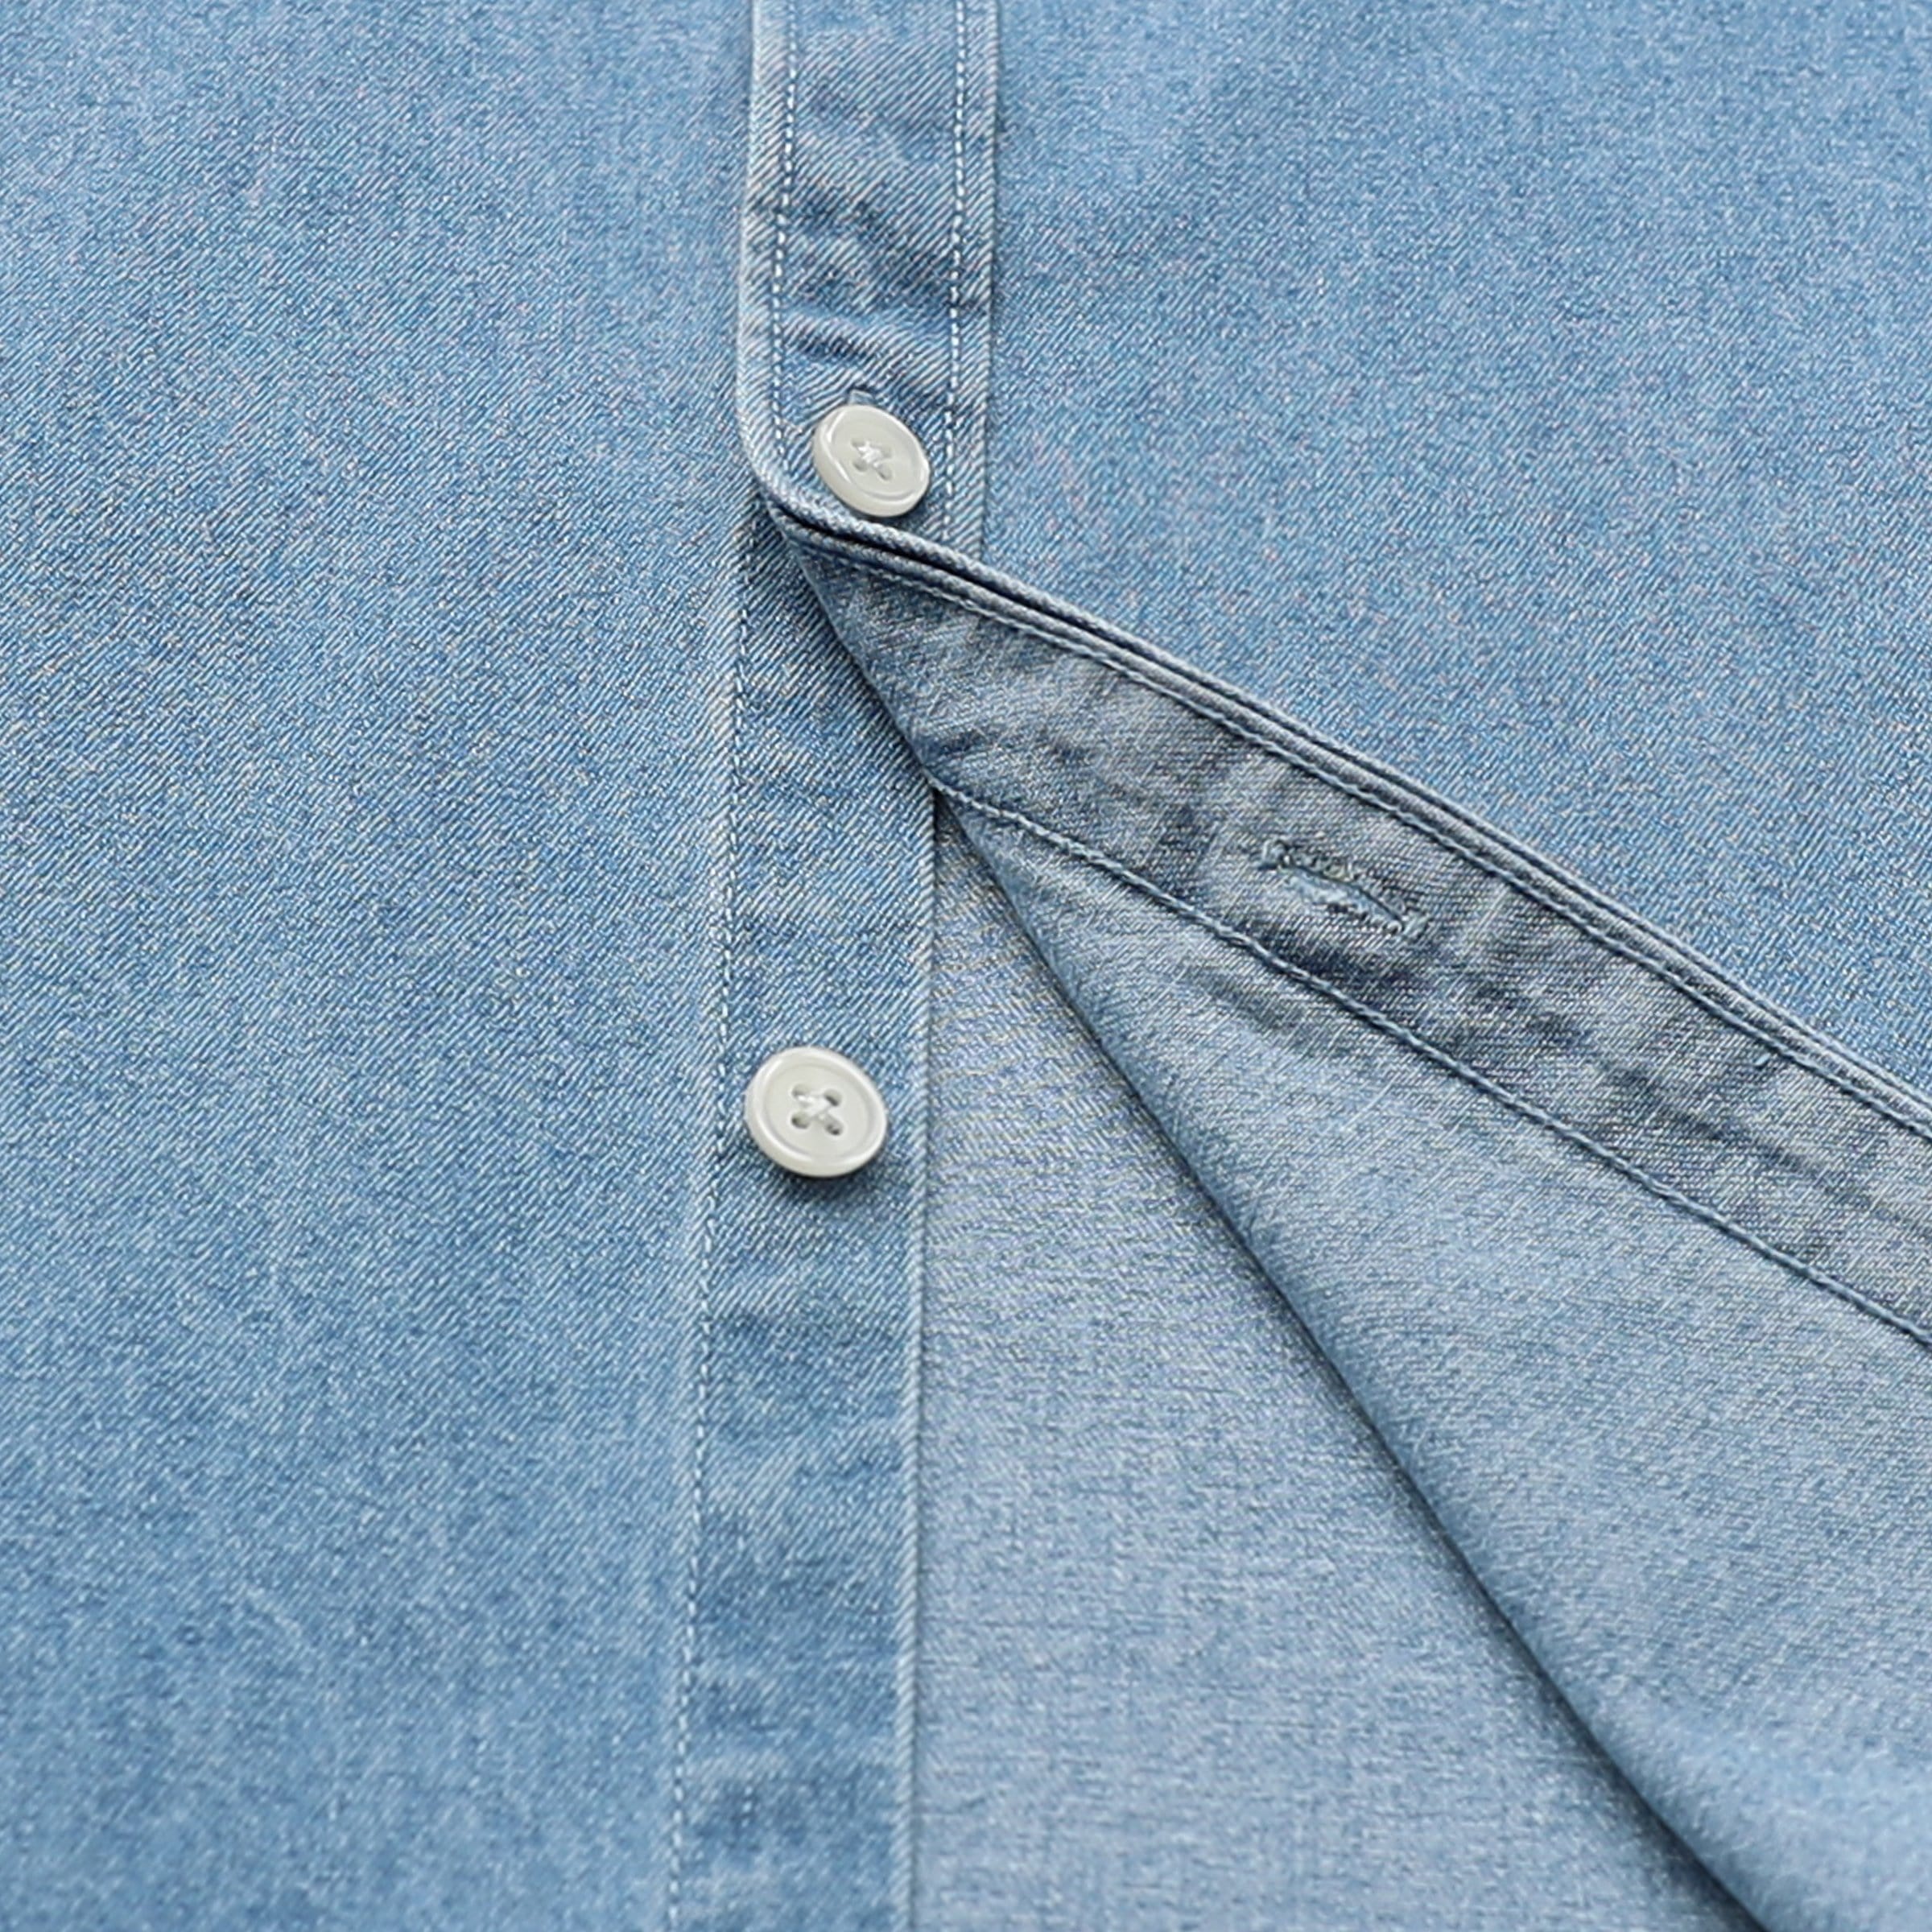 Men's cotton short-sleeved denim shirt #5501